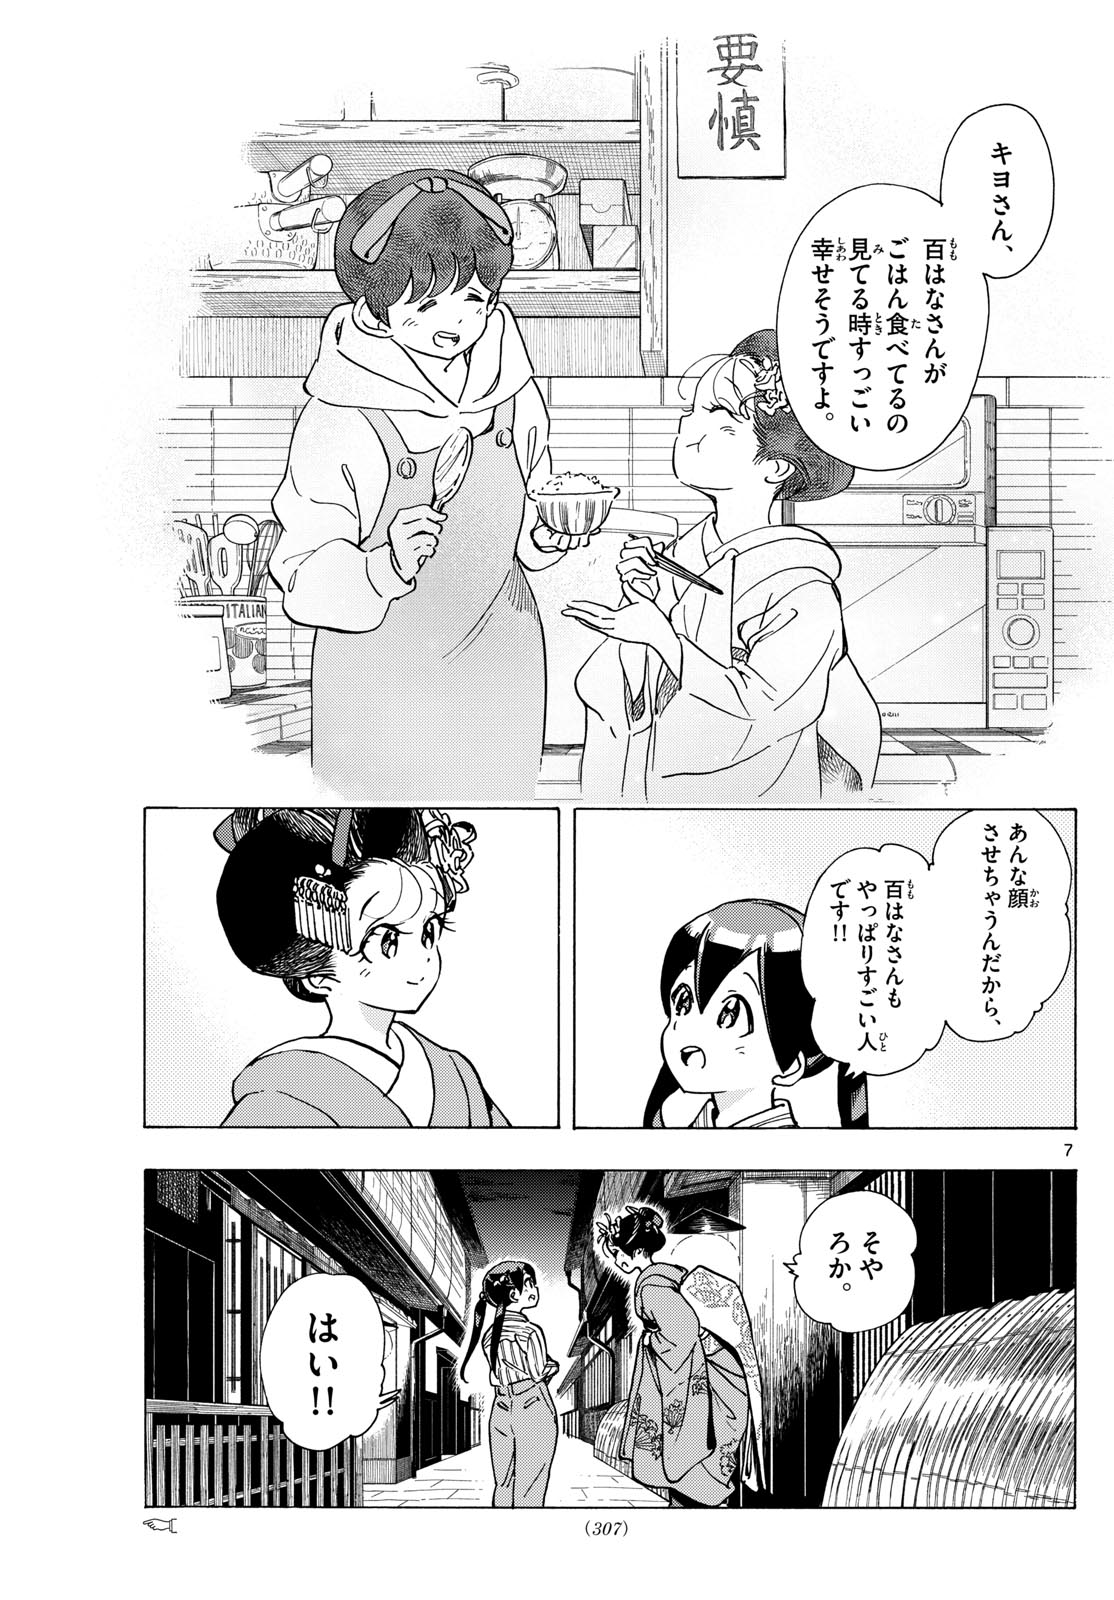 Maiko-san Chi no Makanai-san - Chapter 290 - Page 7